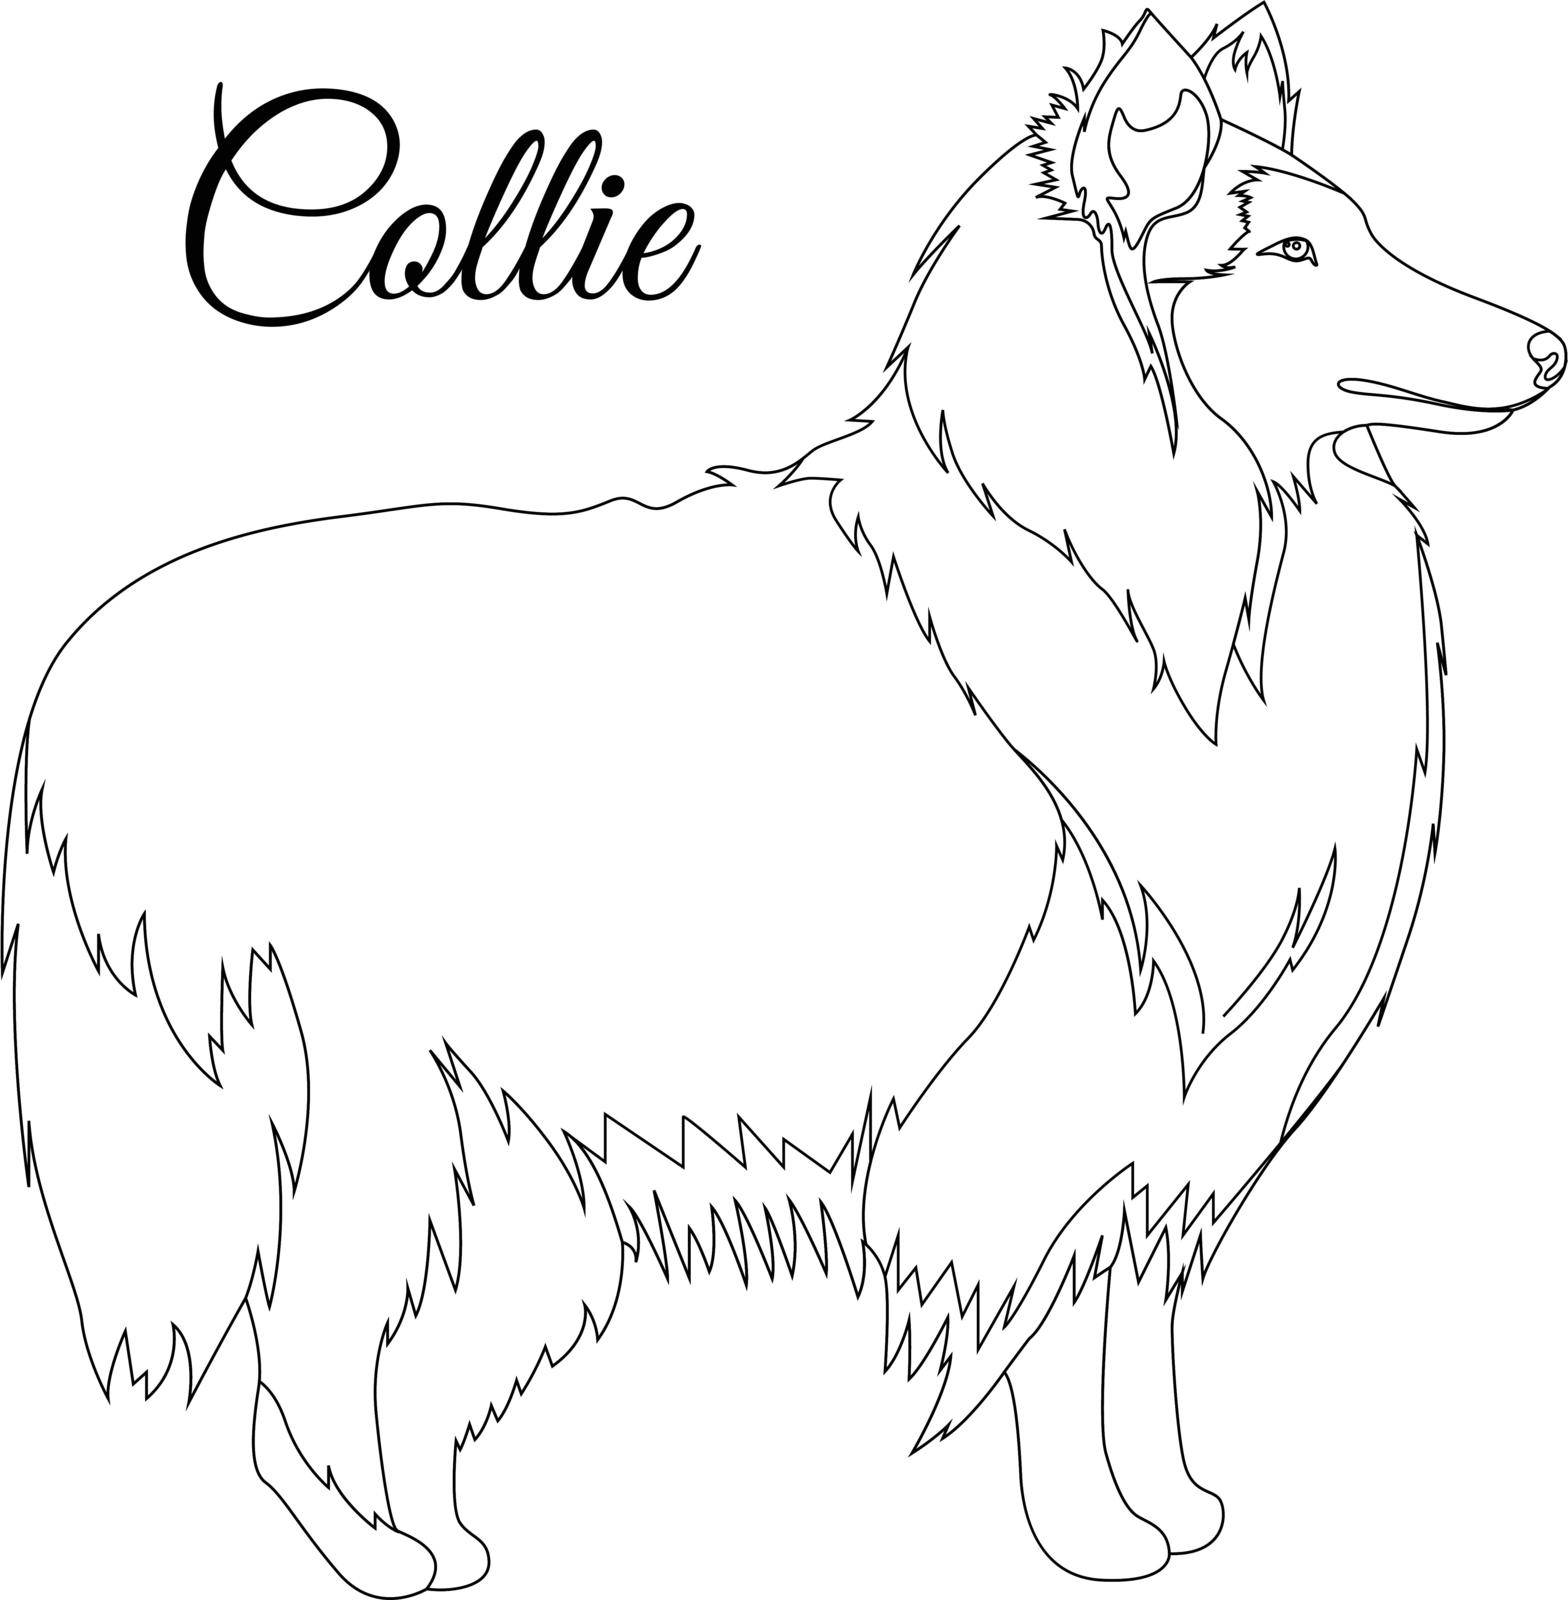 Collie dog outline by Marishkayu